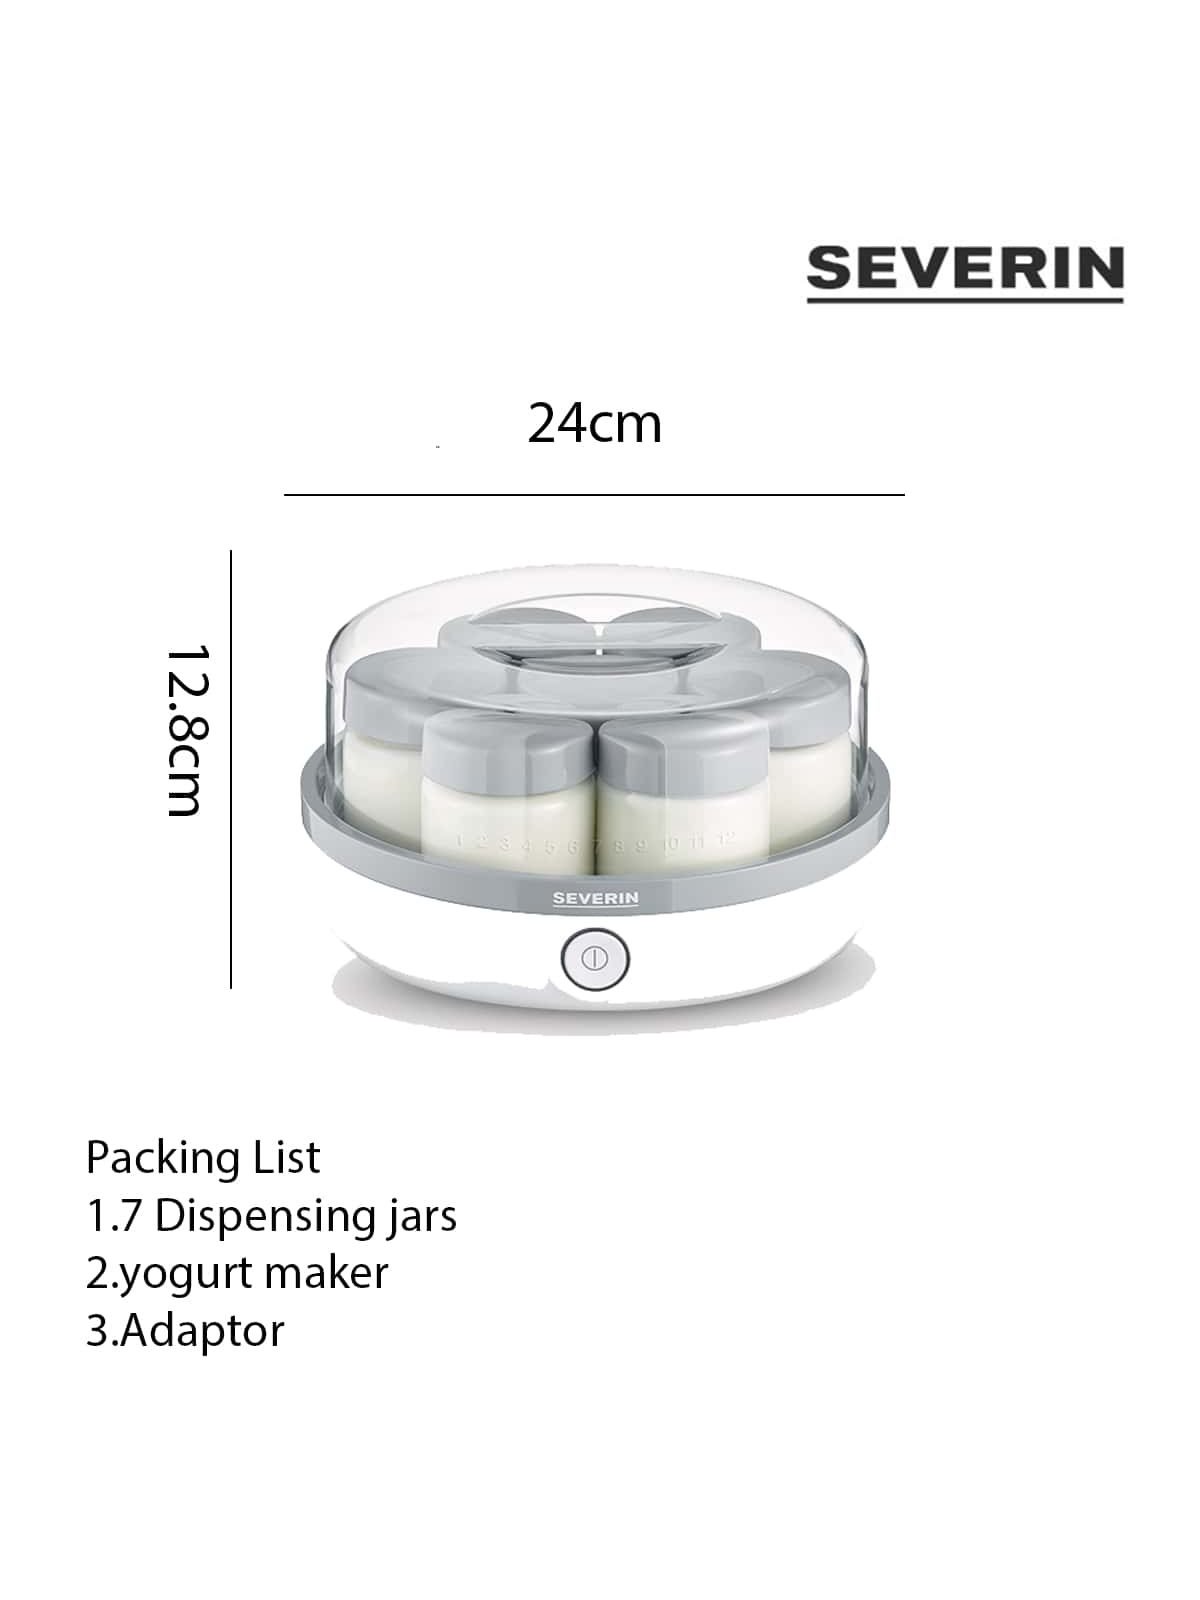 Severin JG3518 Yogurt Maker Healthy Enjoyment with 7 Dispenser Tins-White-9